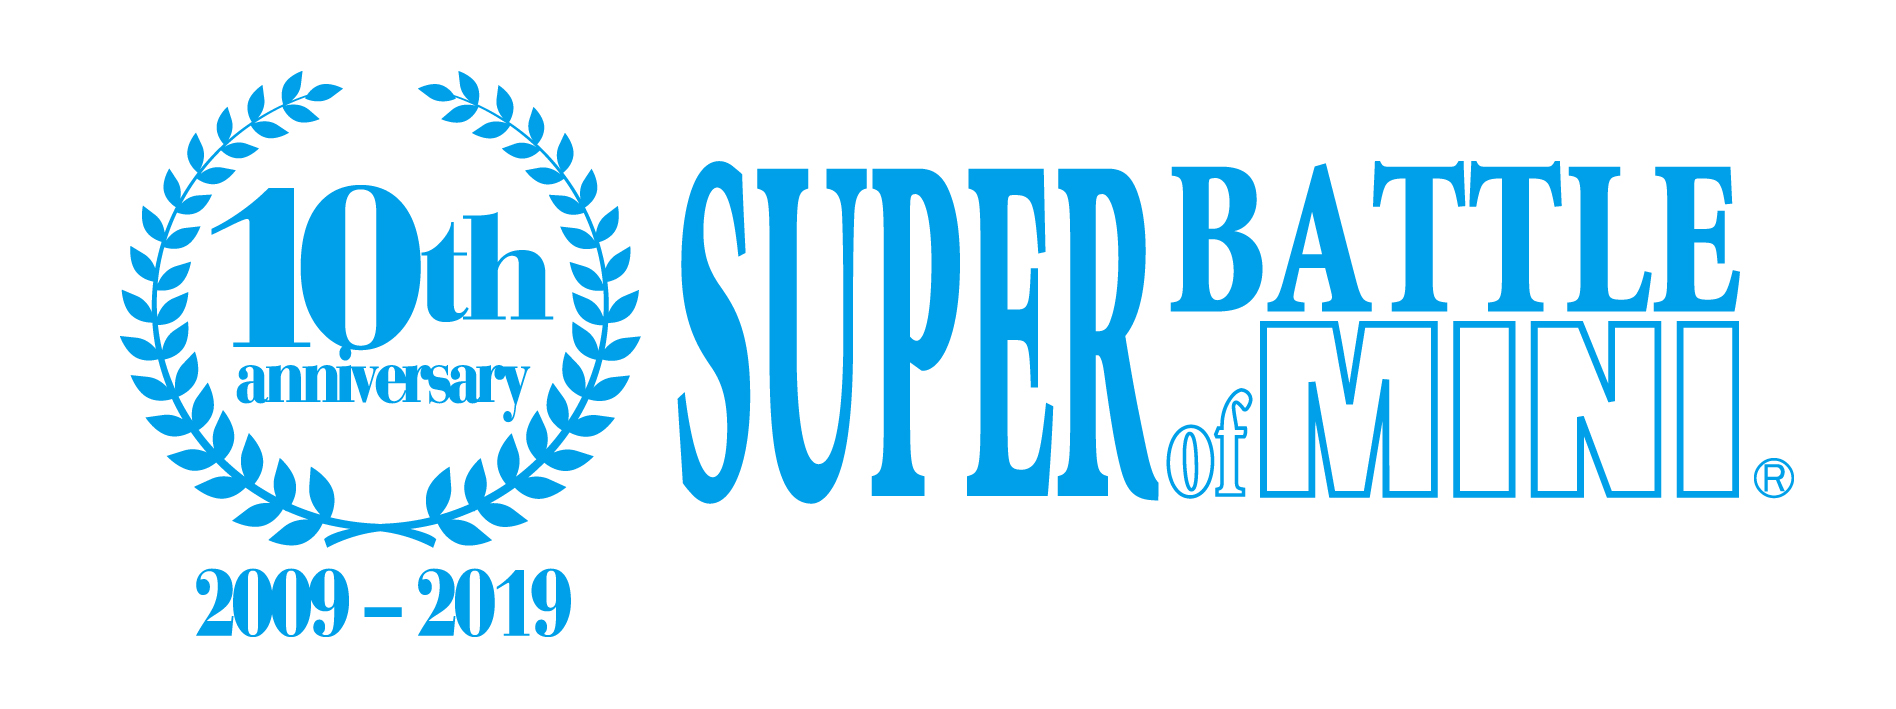 SUPER BATTLE of MINI 第 3 戦開催について